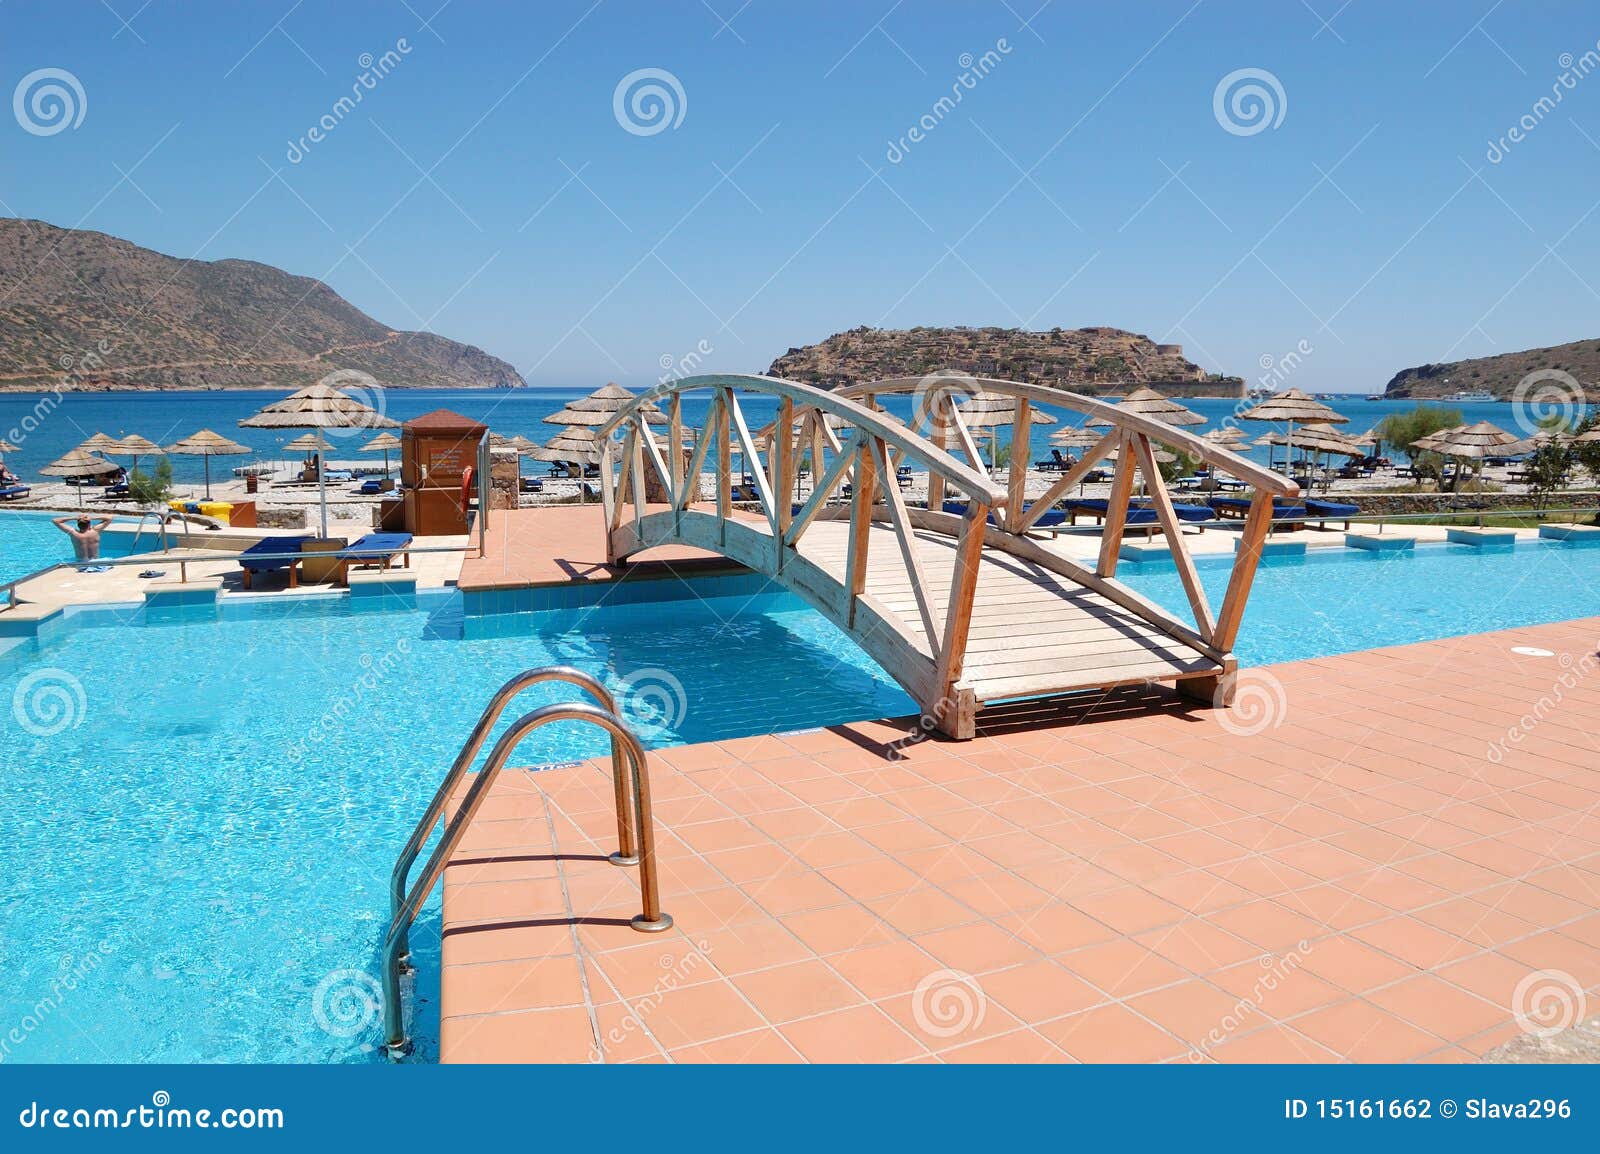 bridge-over-swimming-pool-to-beach-15161662.jpg